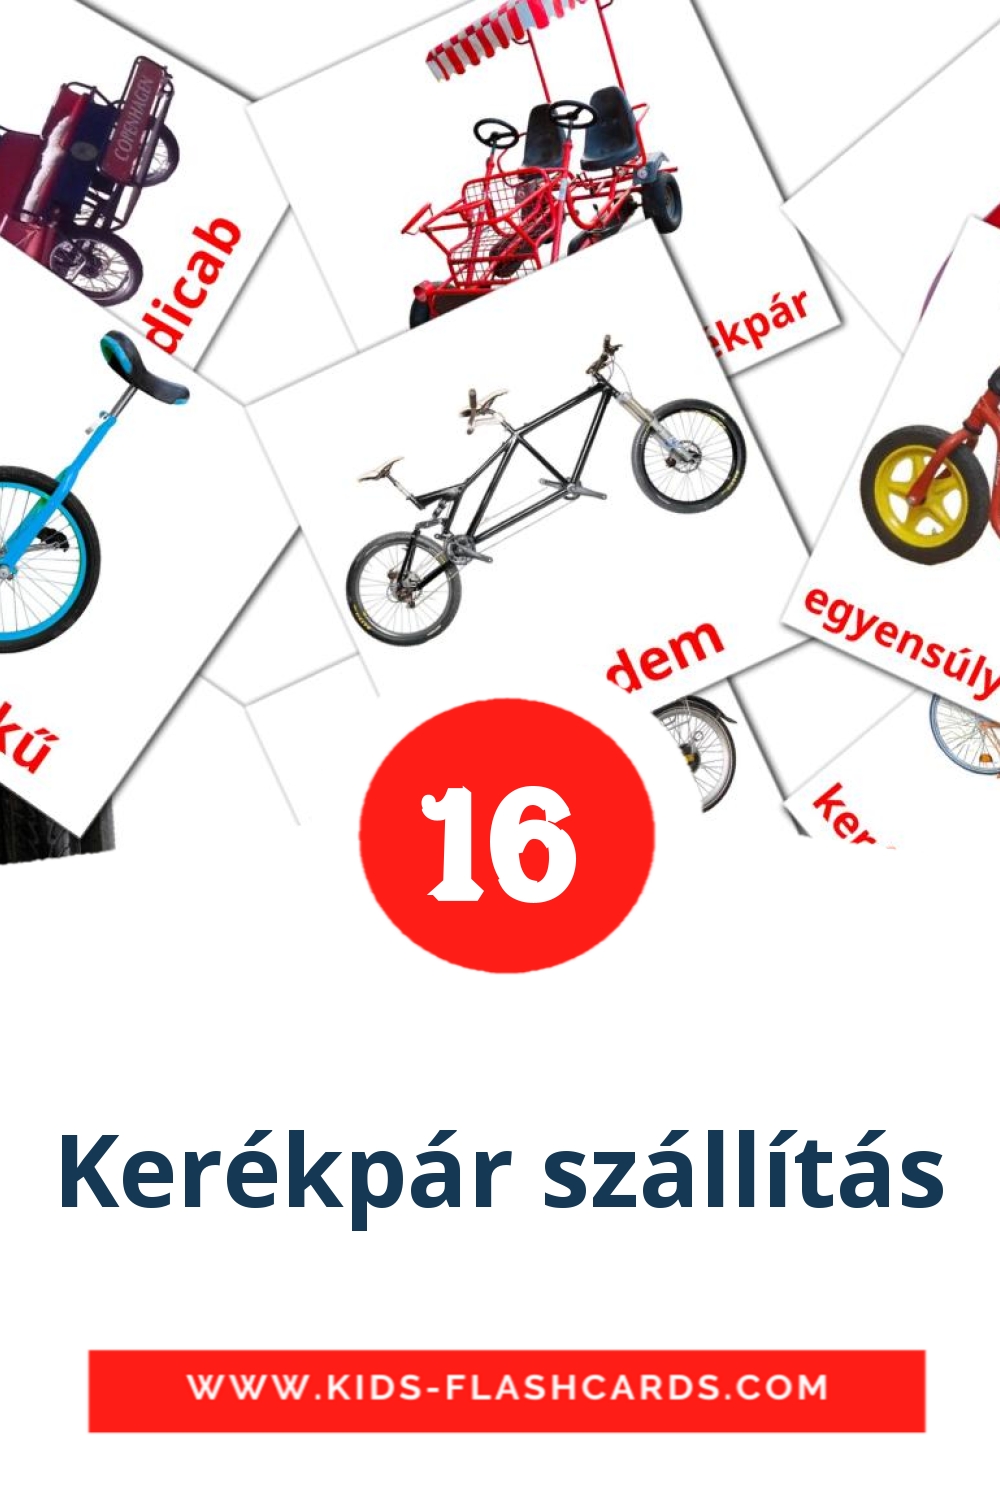 16 carte illustrate di Kerékpár szállítás per la scuola materna in ungherese